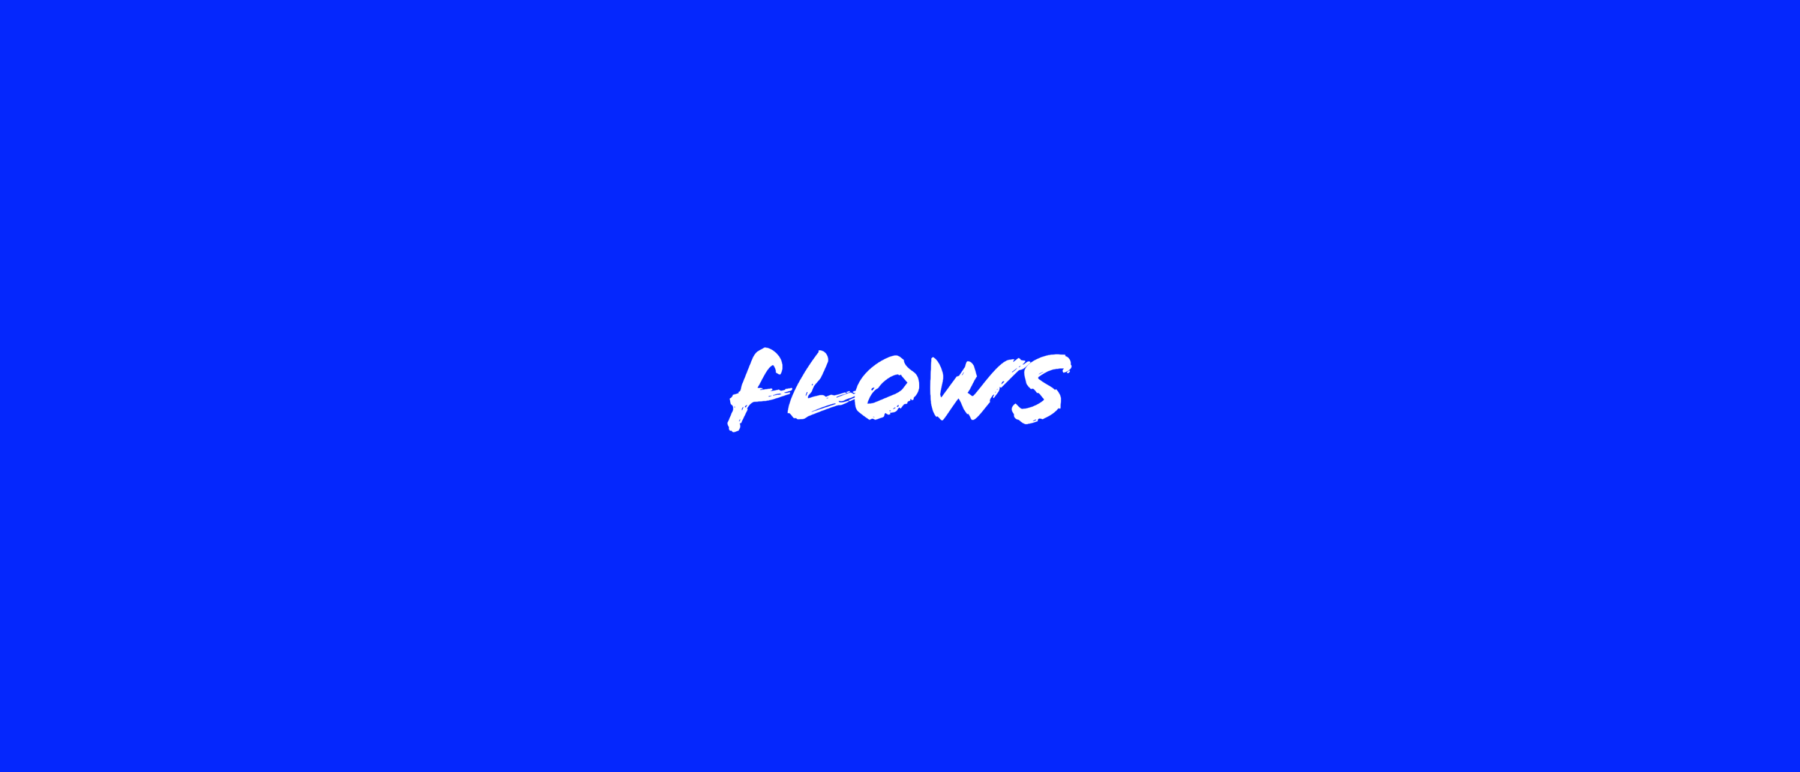 EP - Flows by RAq